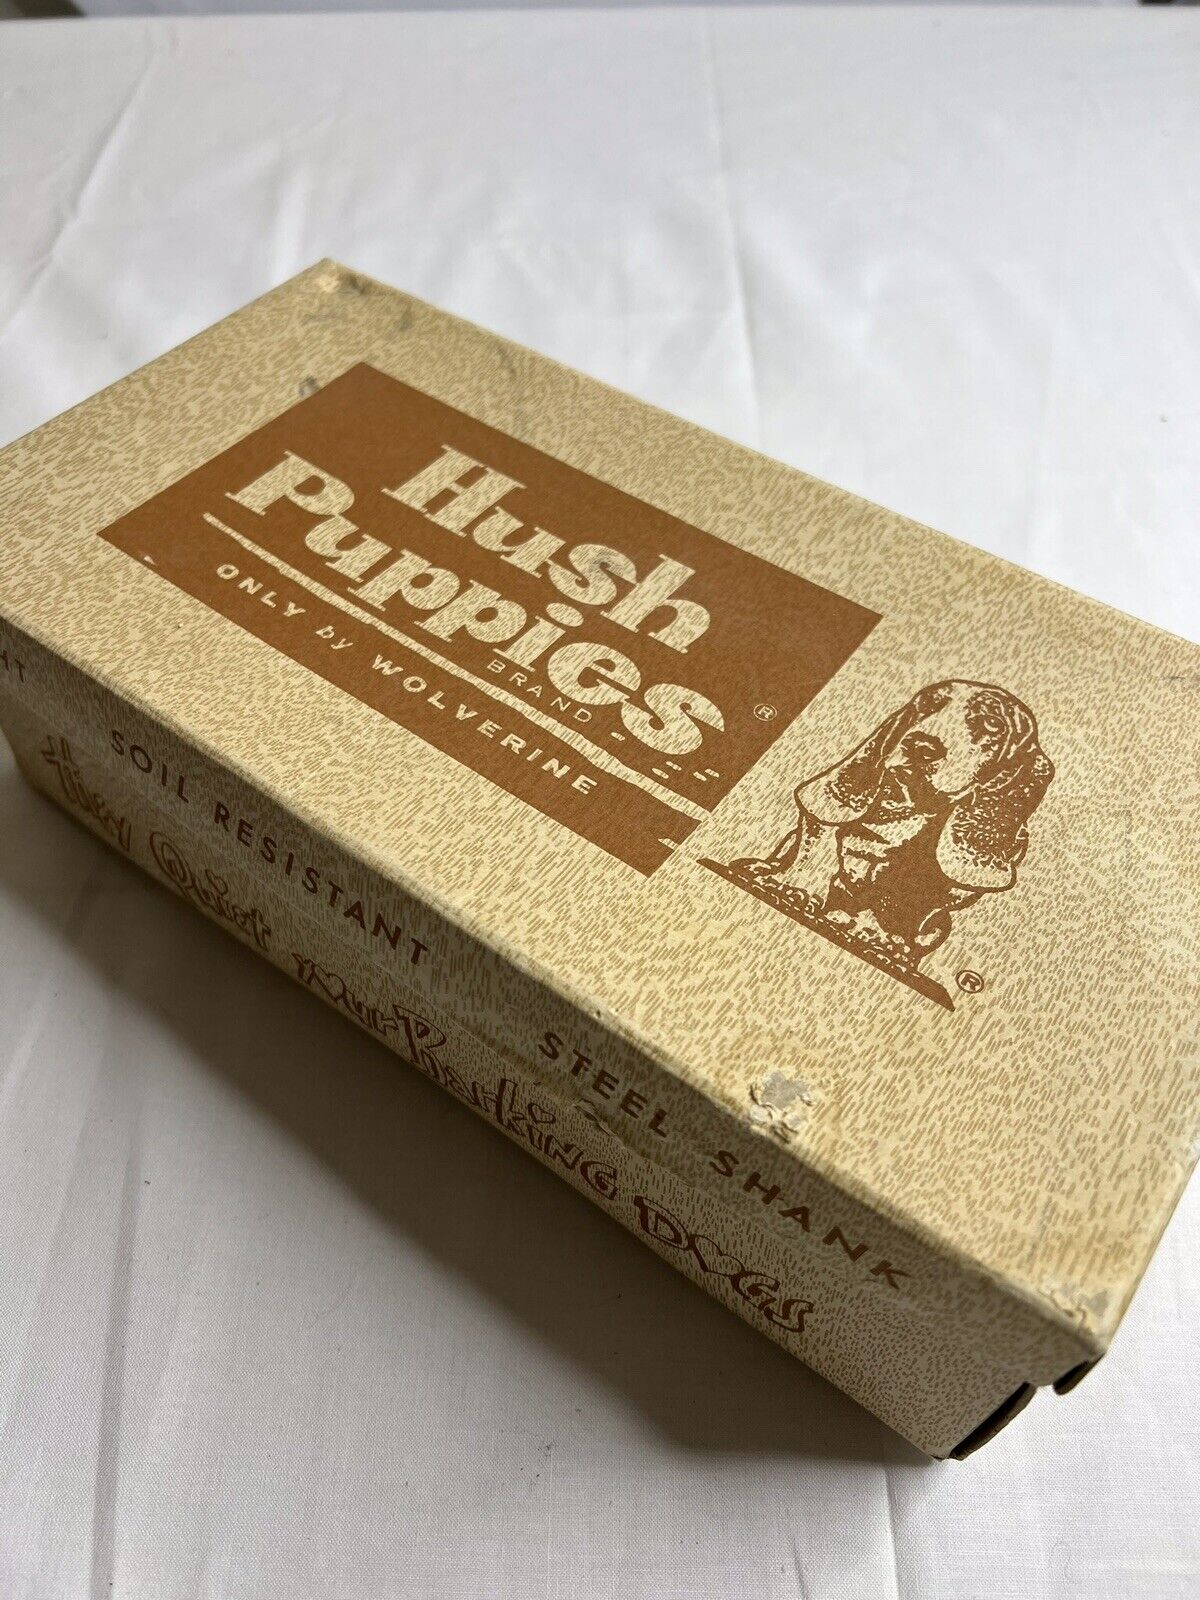 Vintage Hush Puppies Shoe Empty Box Prop Closet Decor 60's TV Show 4 x 6 x 11.5